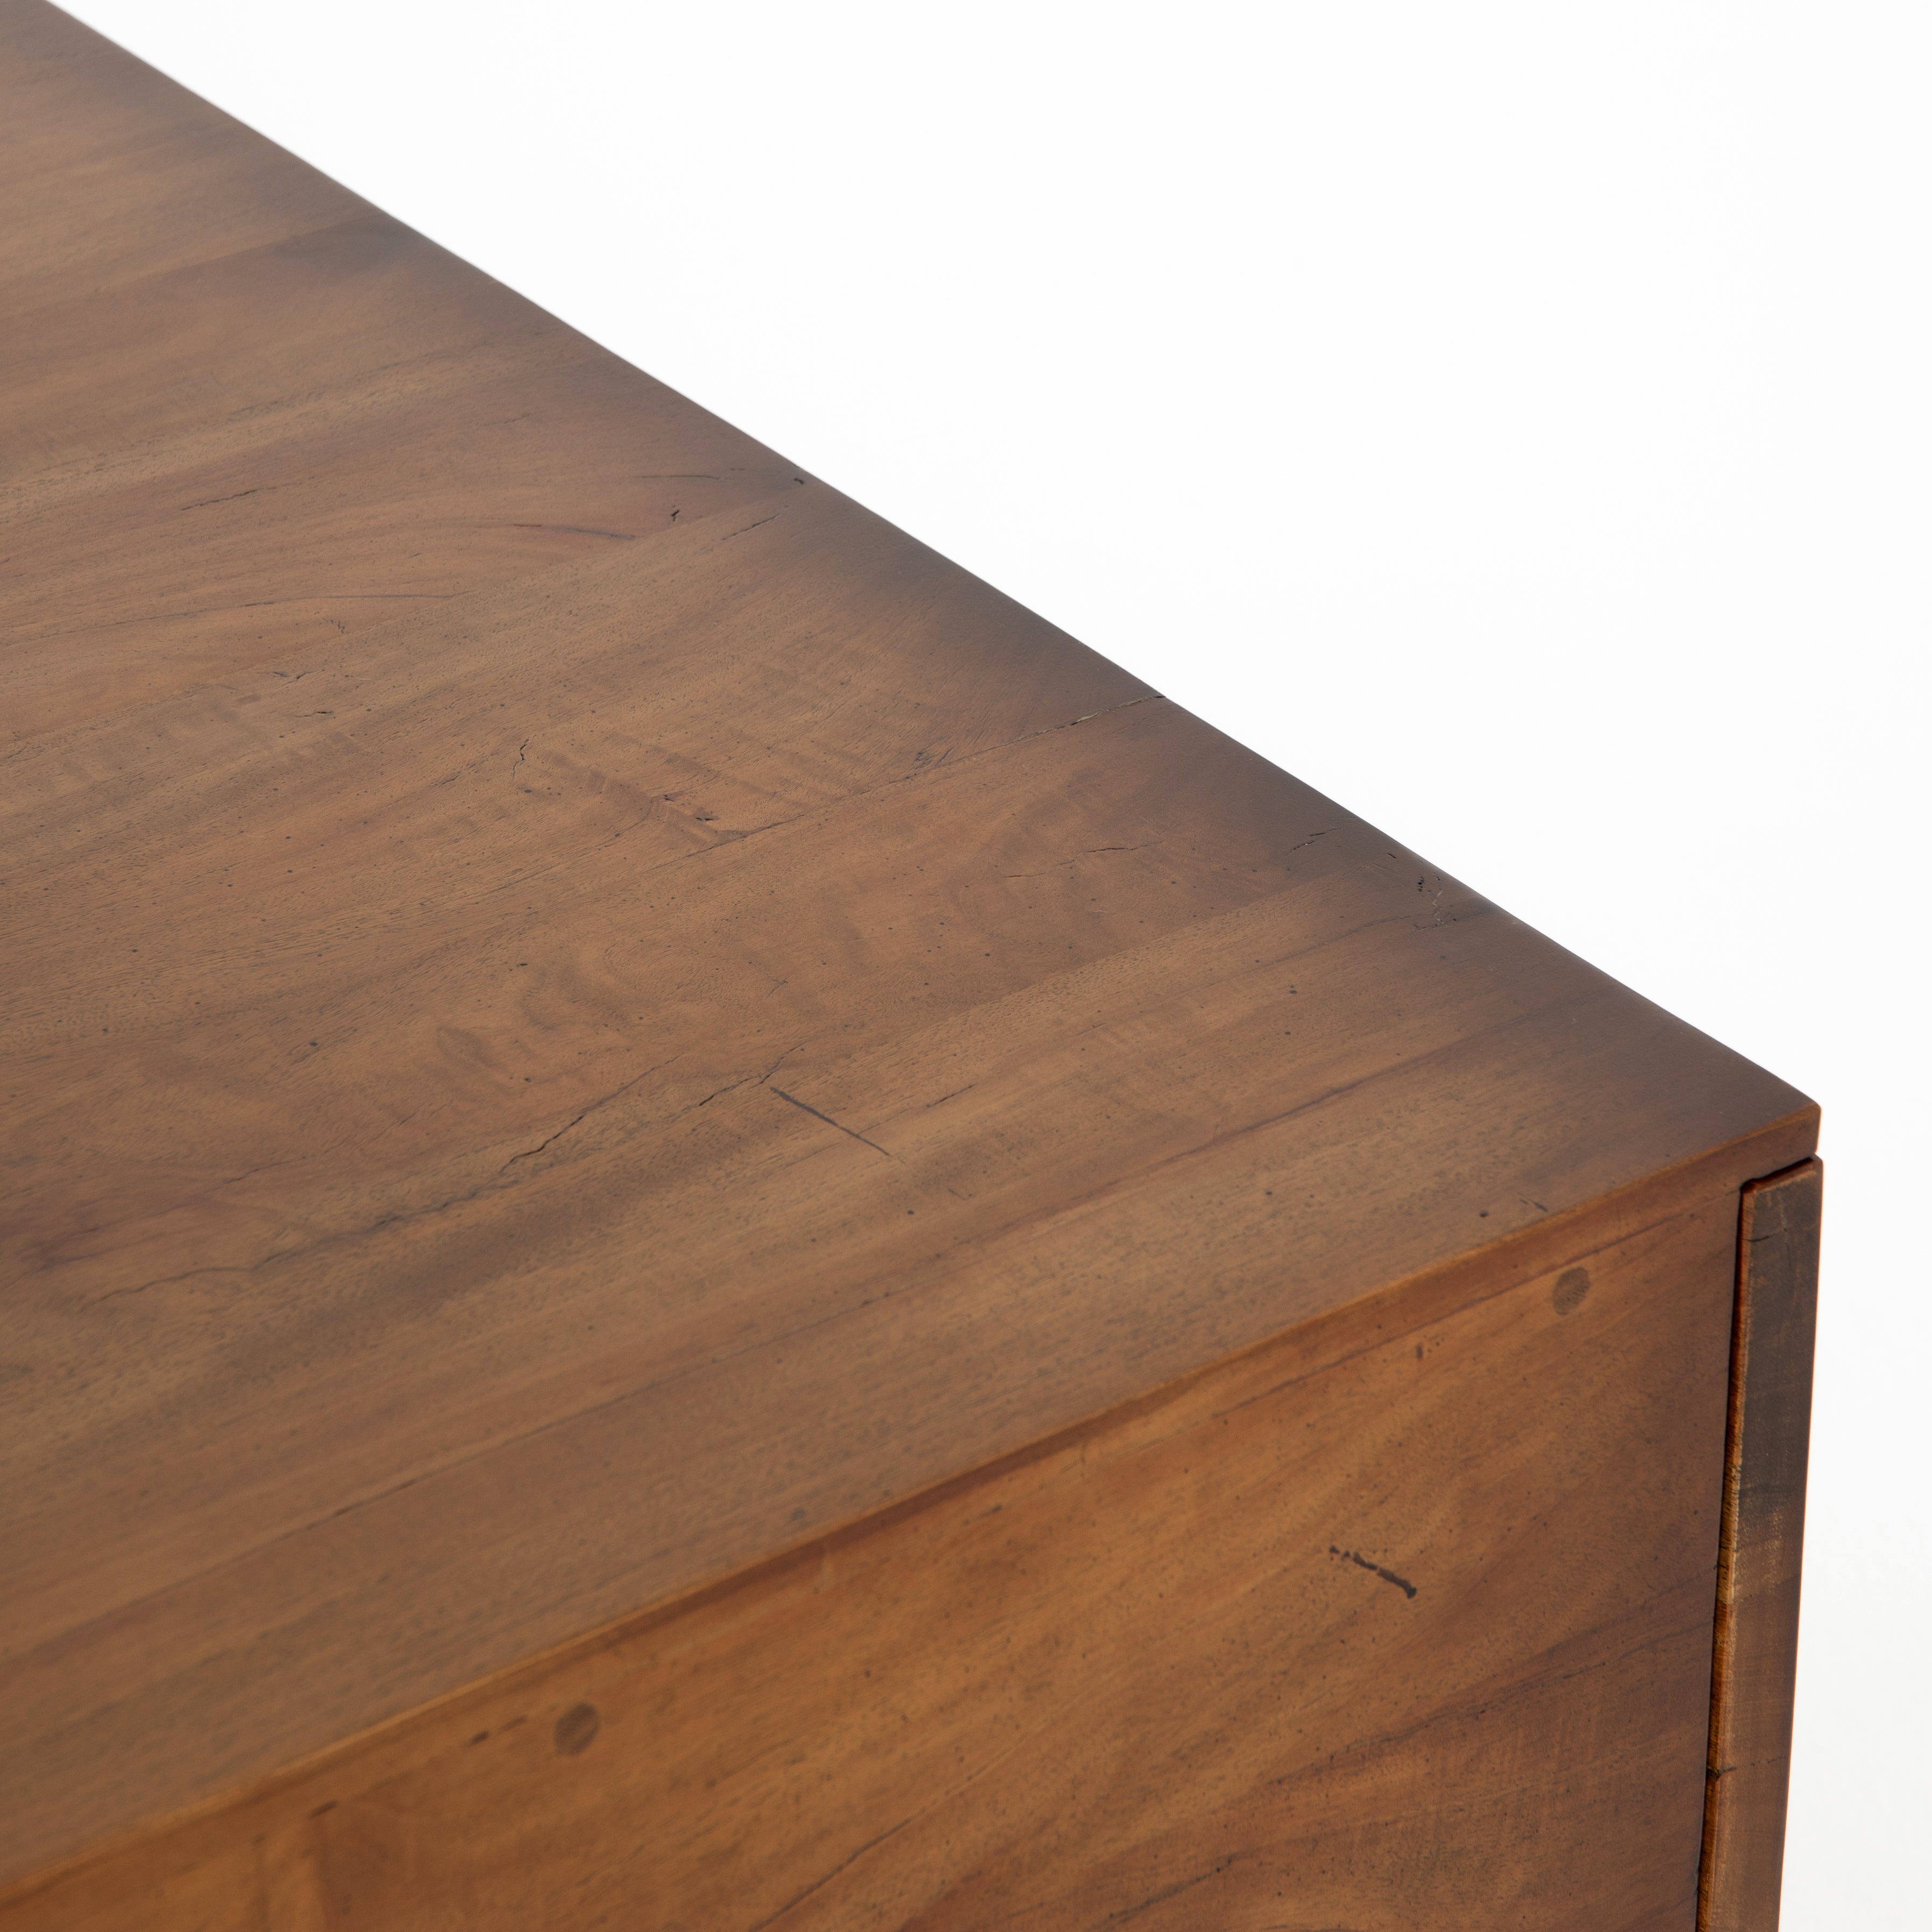 Duncan Storage Coffee Table - StyleMeGHD - Modern Coffee Table